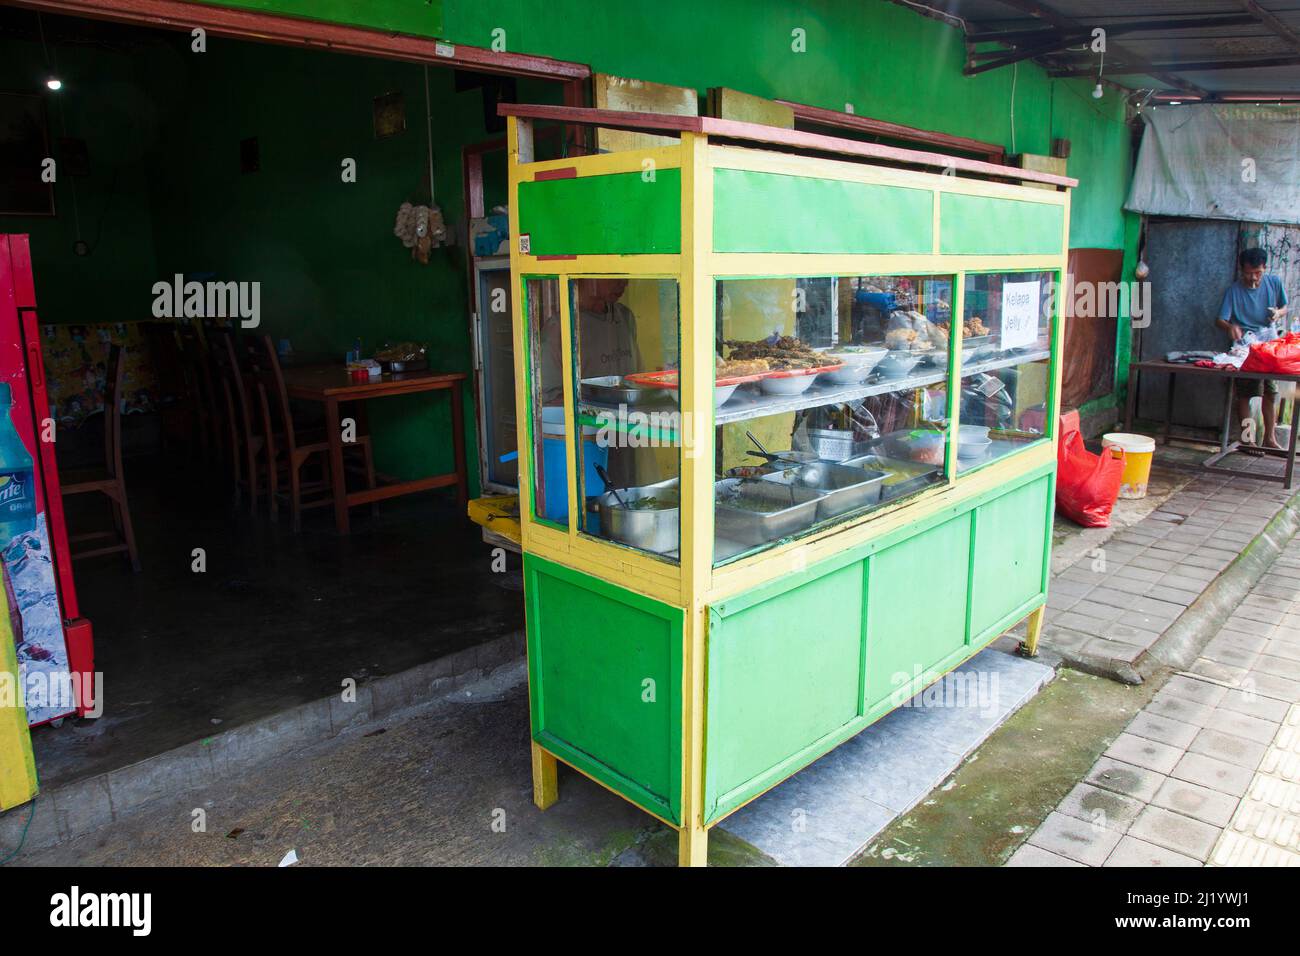 Ein grünes Street Food Restaurant in Sukawati, Bali, Indonesien. Stockfoto